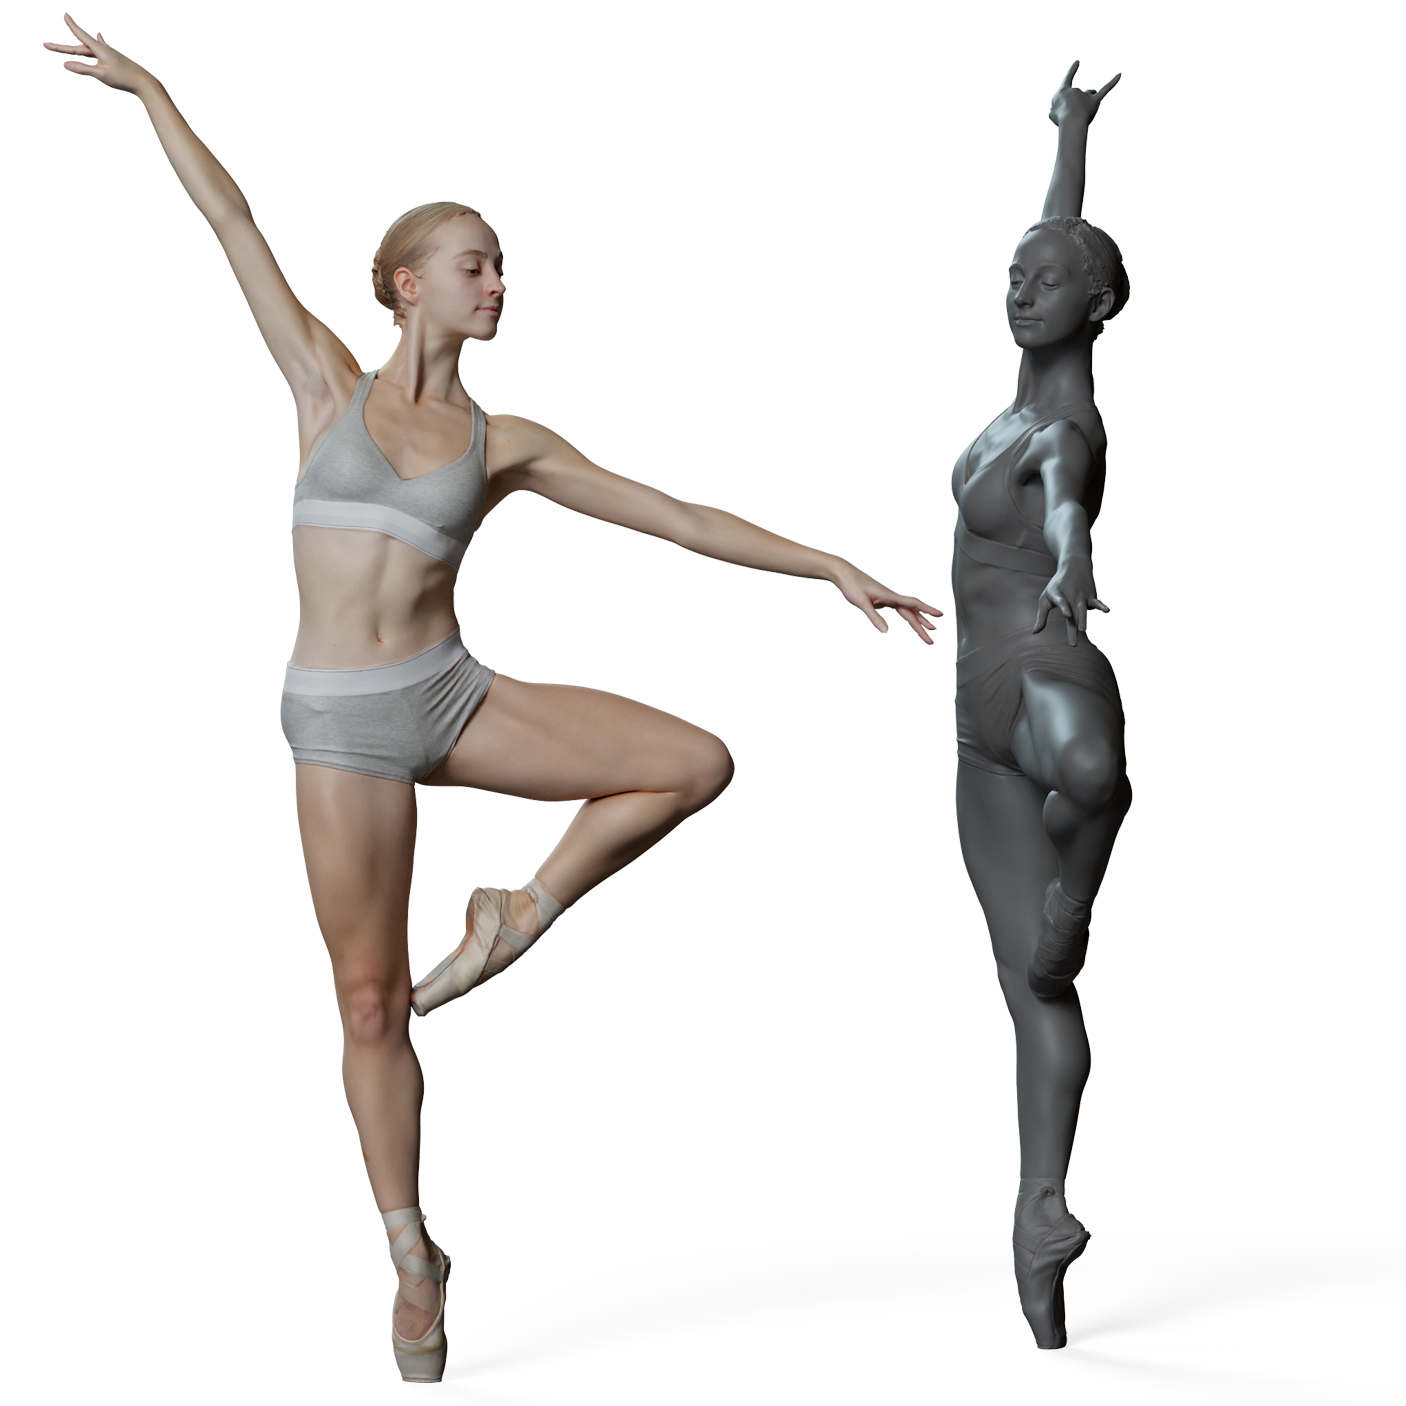 De Instagram | Dance photography poses, Dance poses, Ballet poses